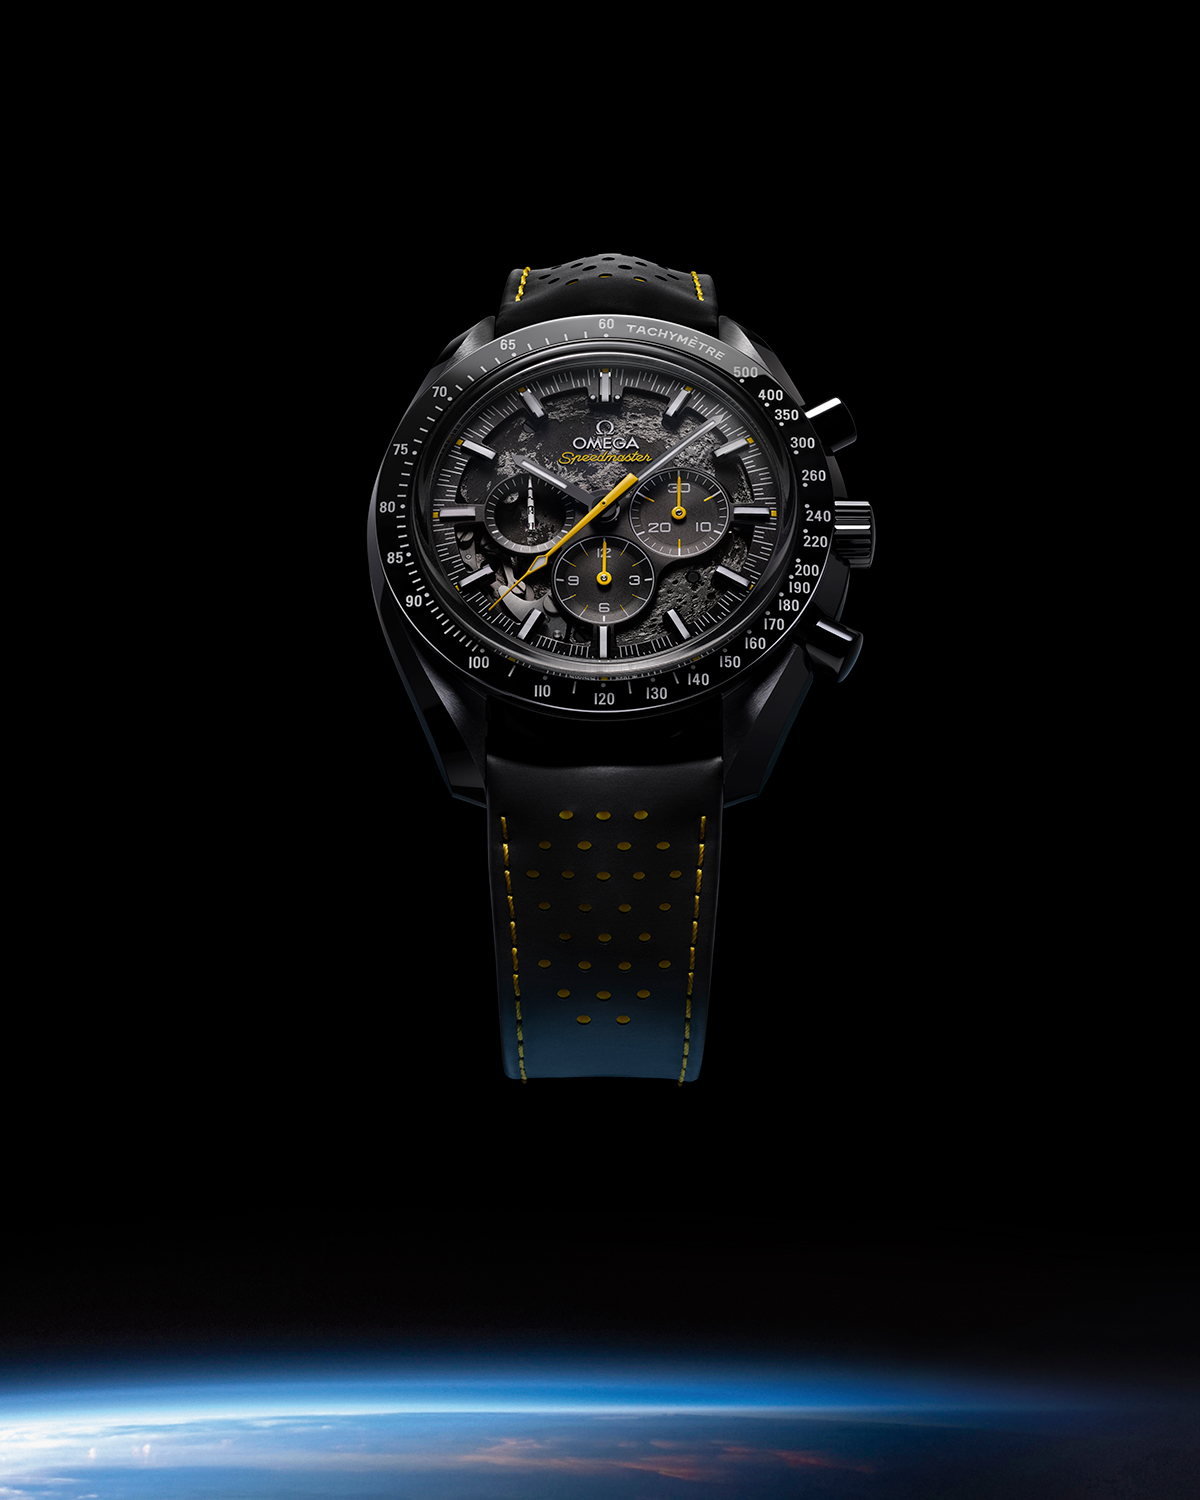 Cortina-Watch-Omega-Speedmaster-Apollo-8-Dark-Side-of-the-Moon-310-92-44-50-01-001-profil.jpg